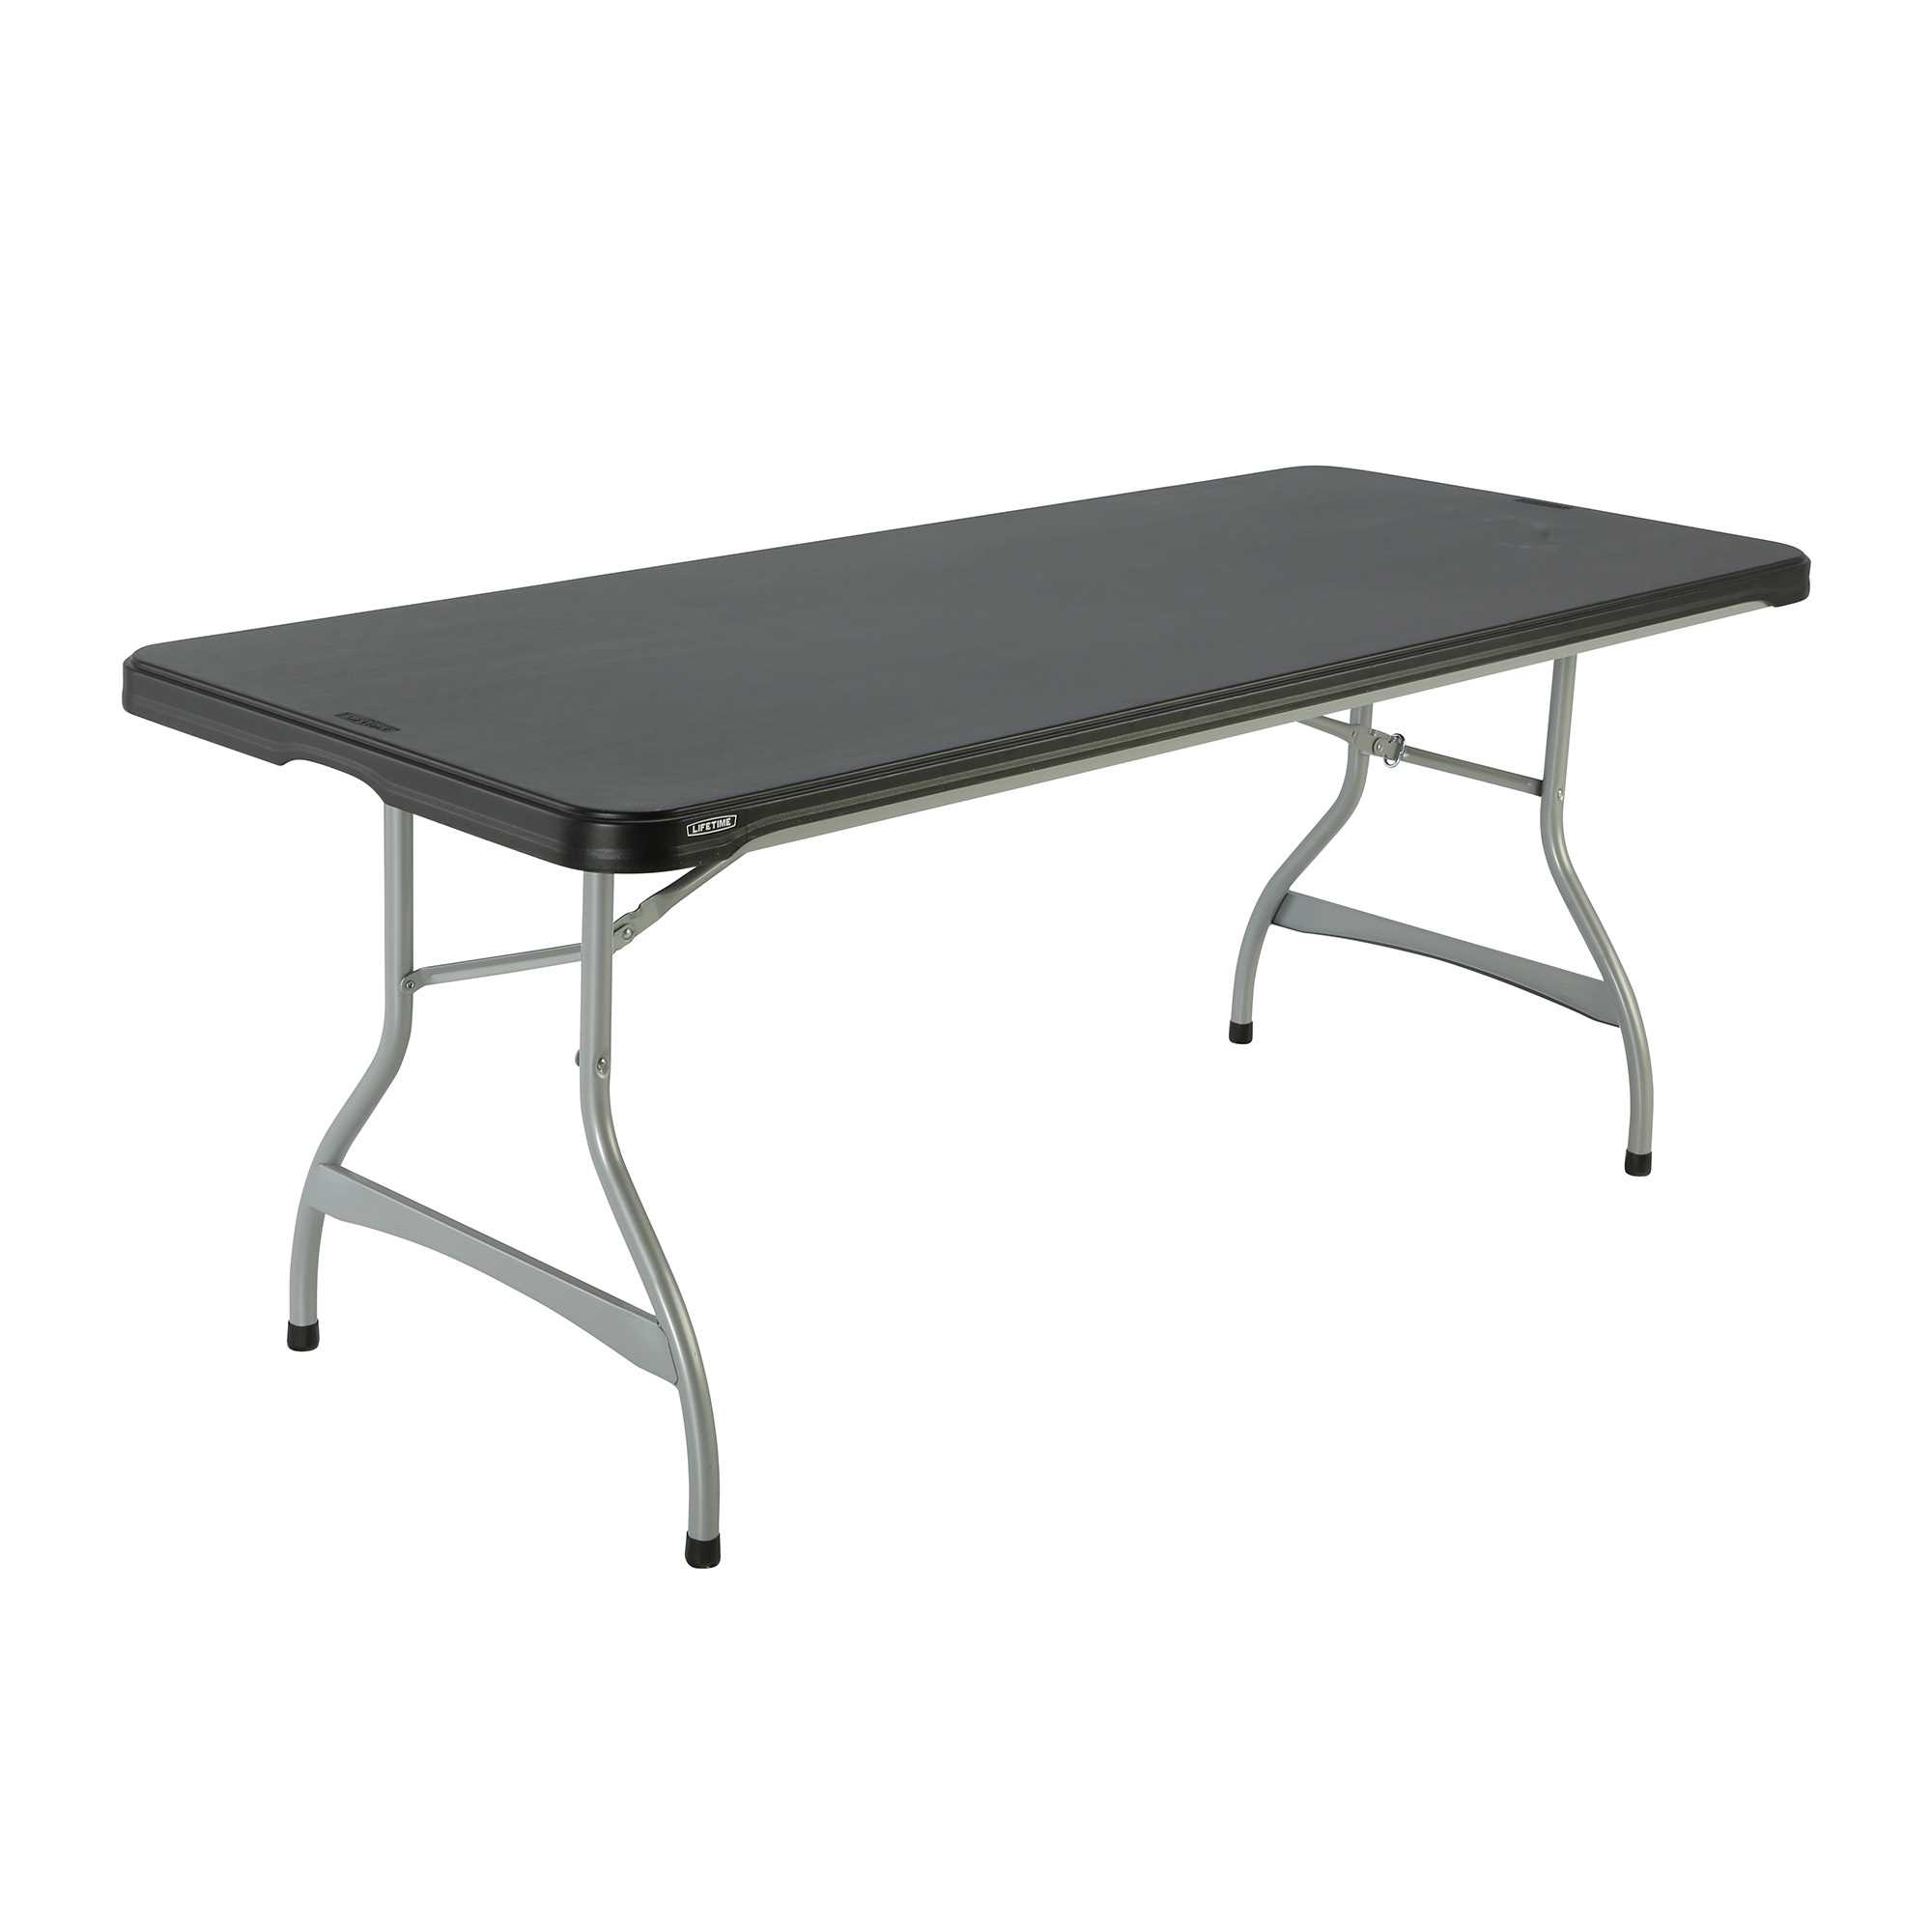 Rectangular table 183cm 80350